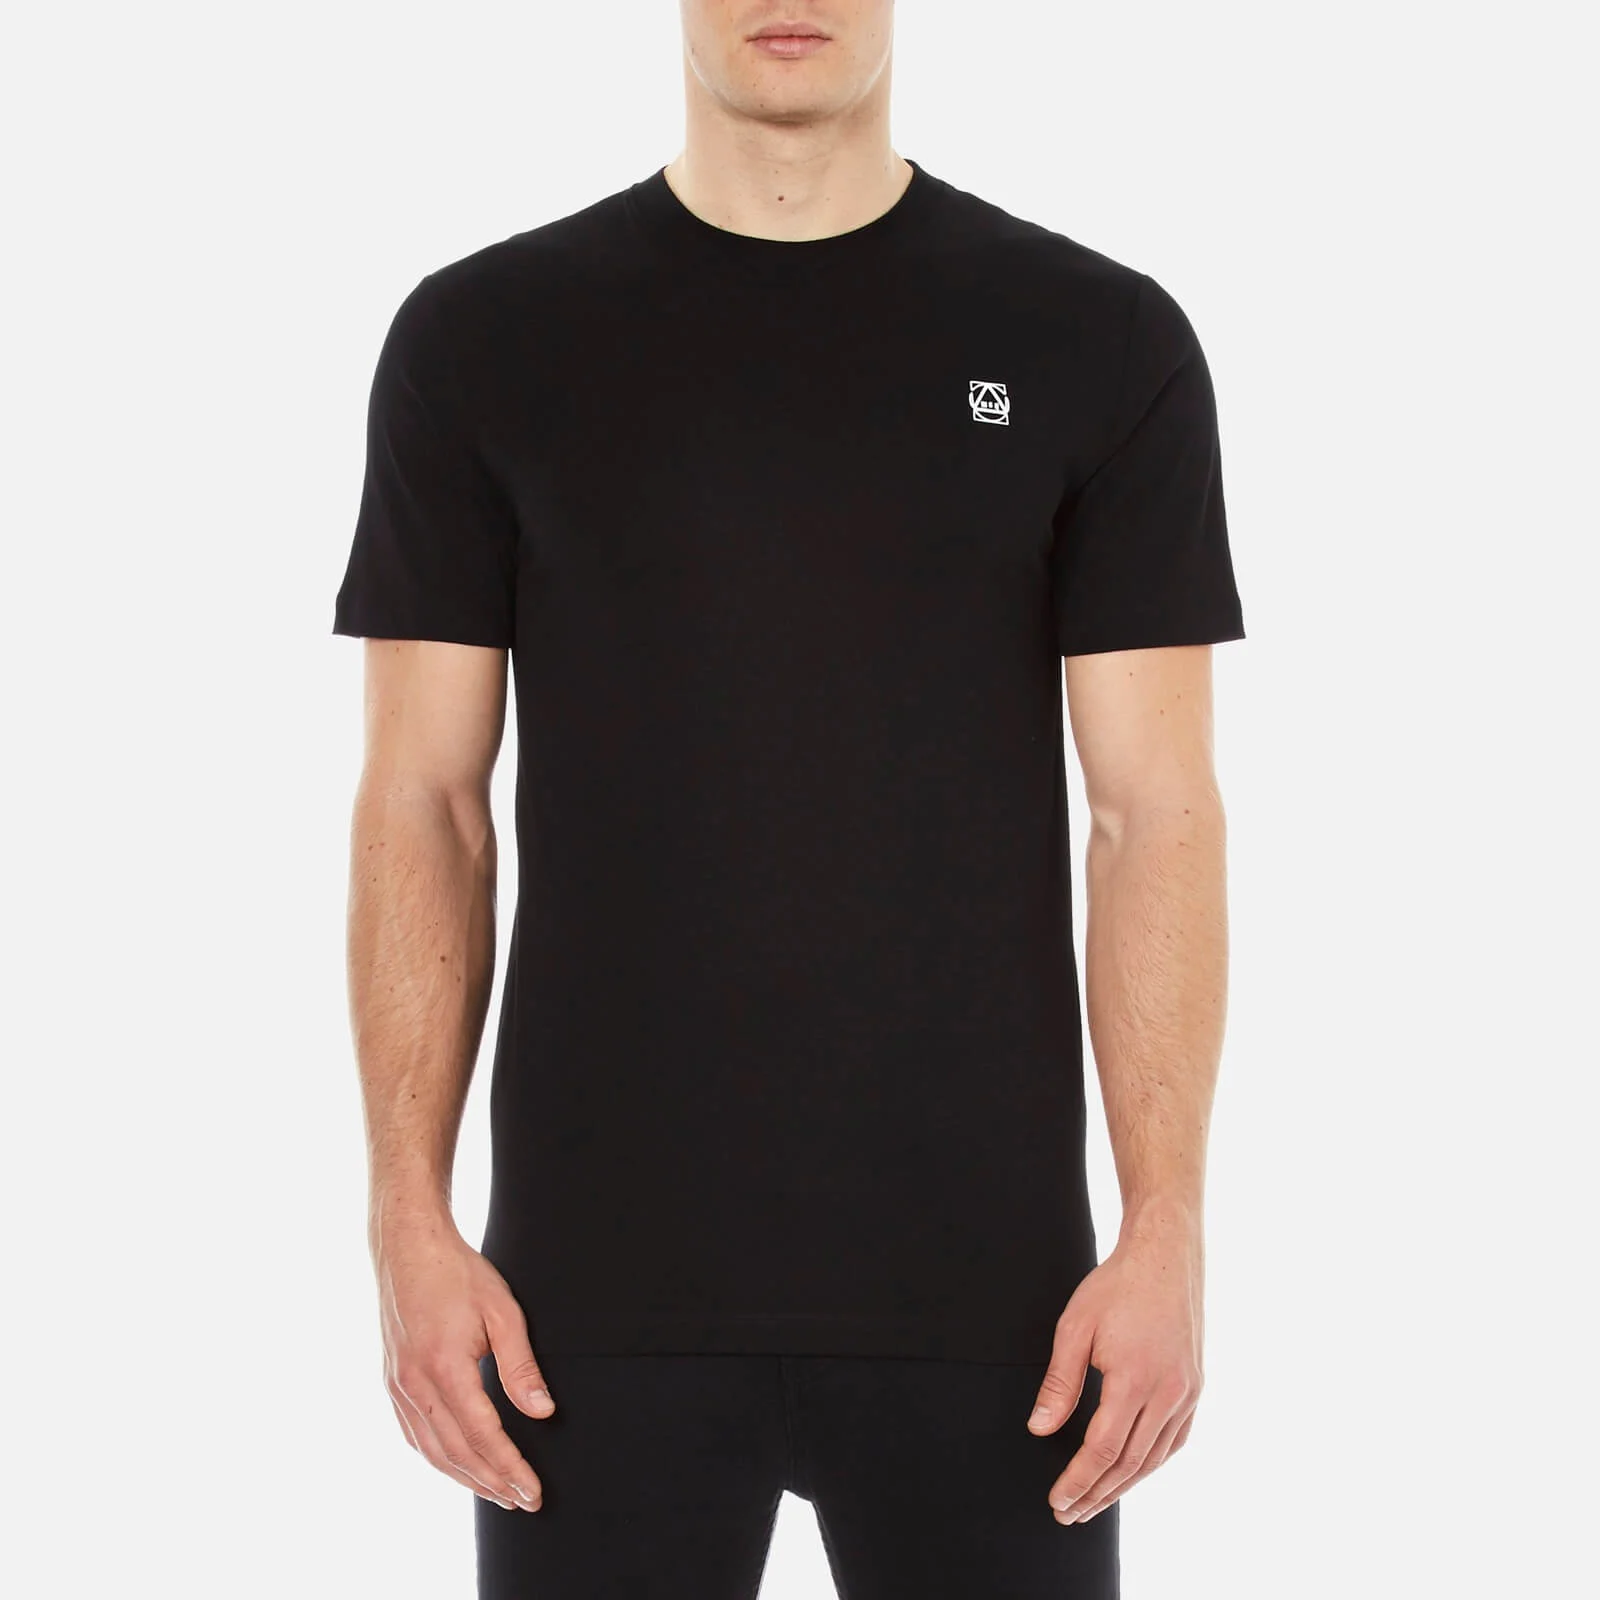 McQ Alexander McQueen Men's Crew Neck T-Shirt - Darkest Black Image 1